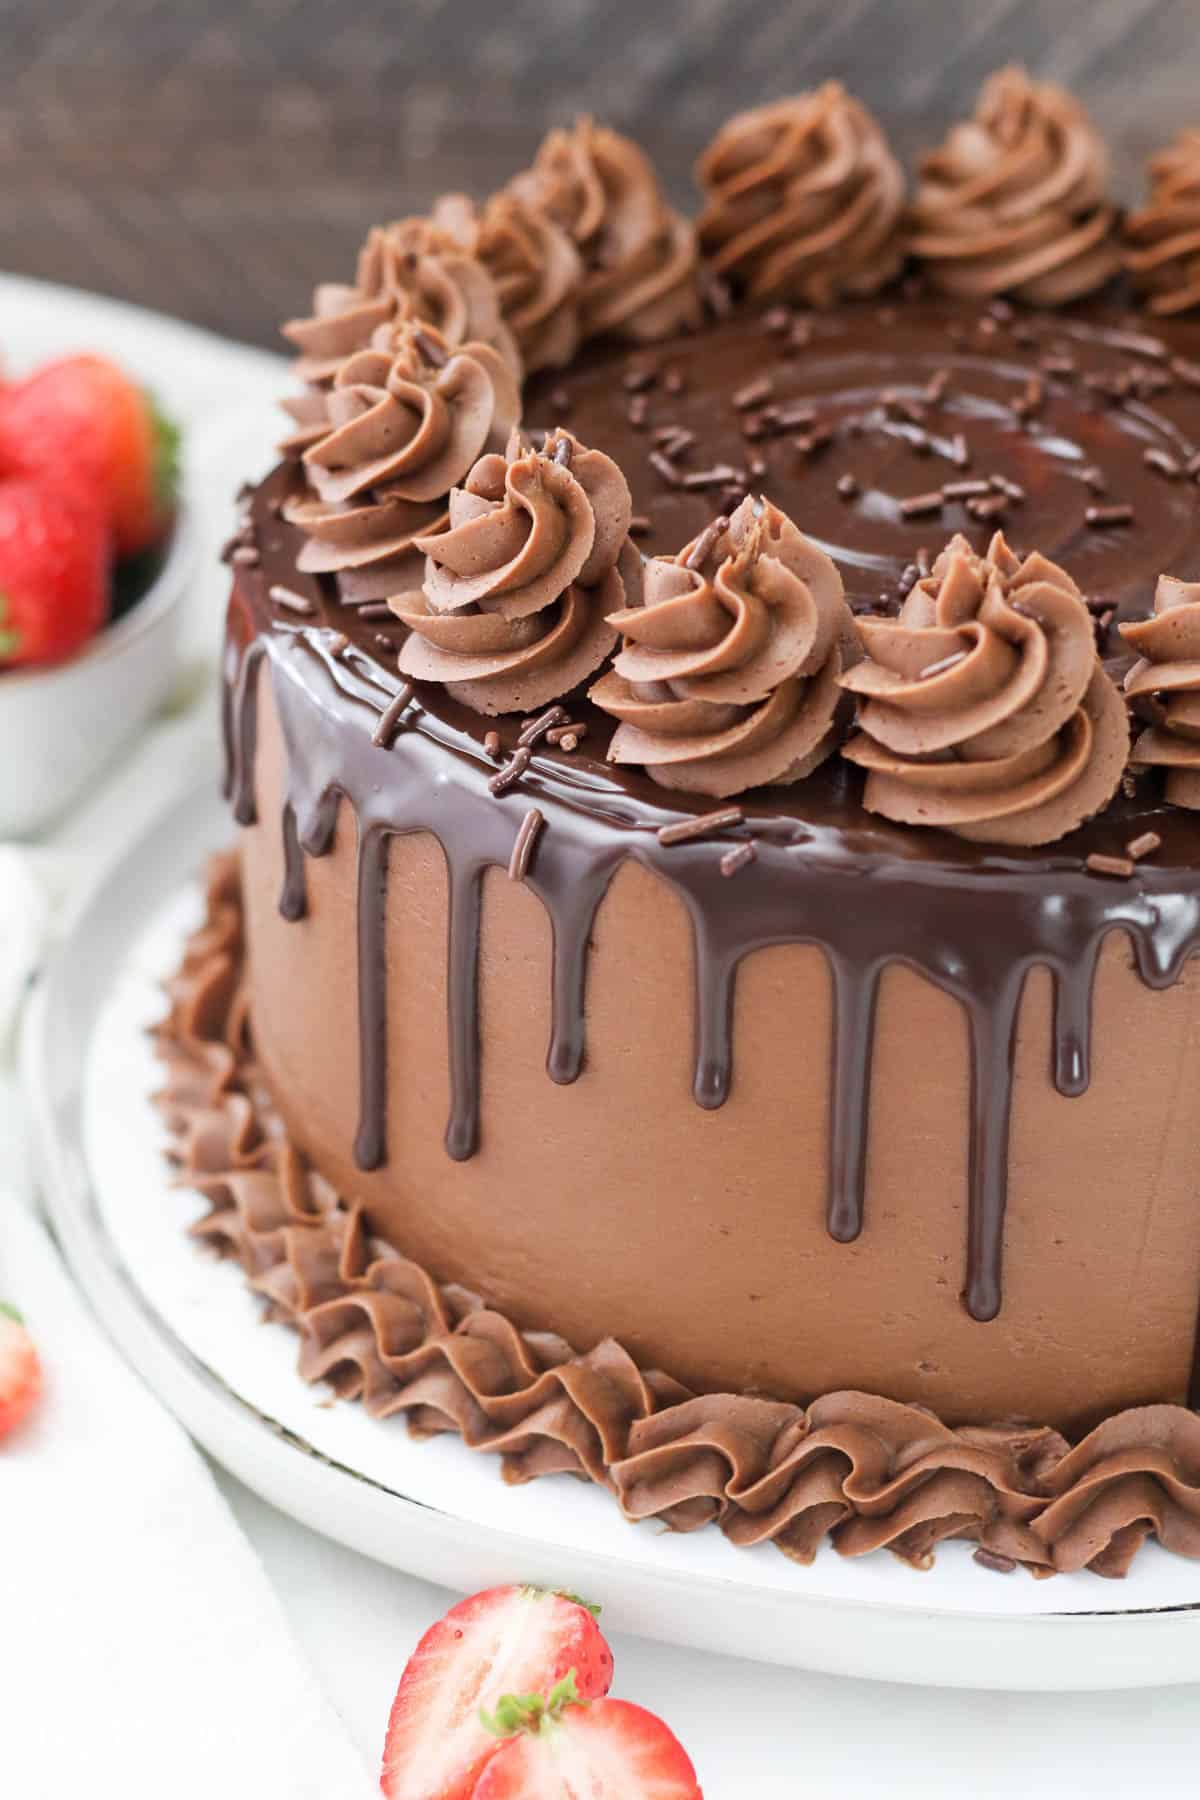 50 Chocolate Cake Design (Cake Idea) - October 2019 | Chocolate cake  designs, Birthday cake for him, Birthday cakes for men